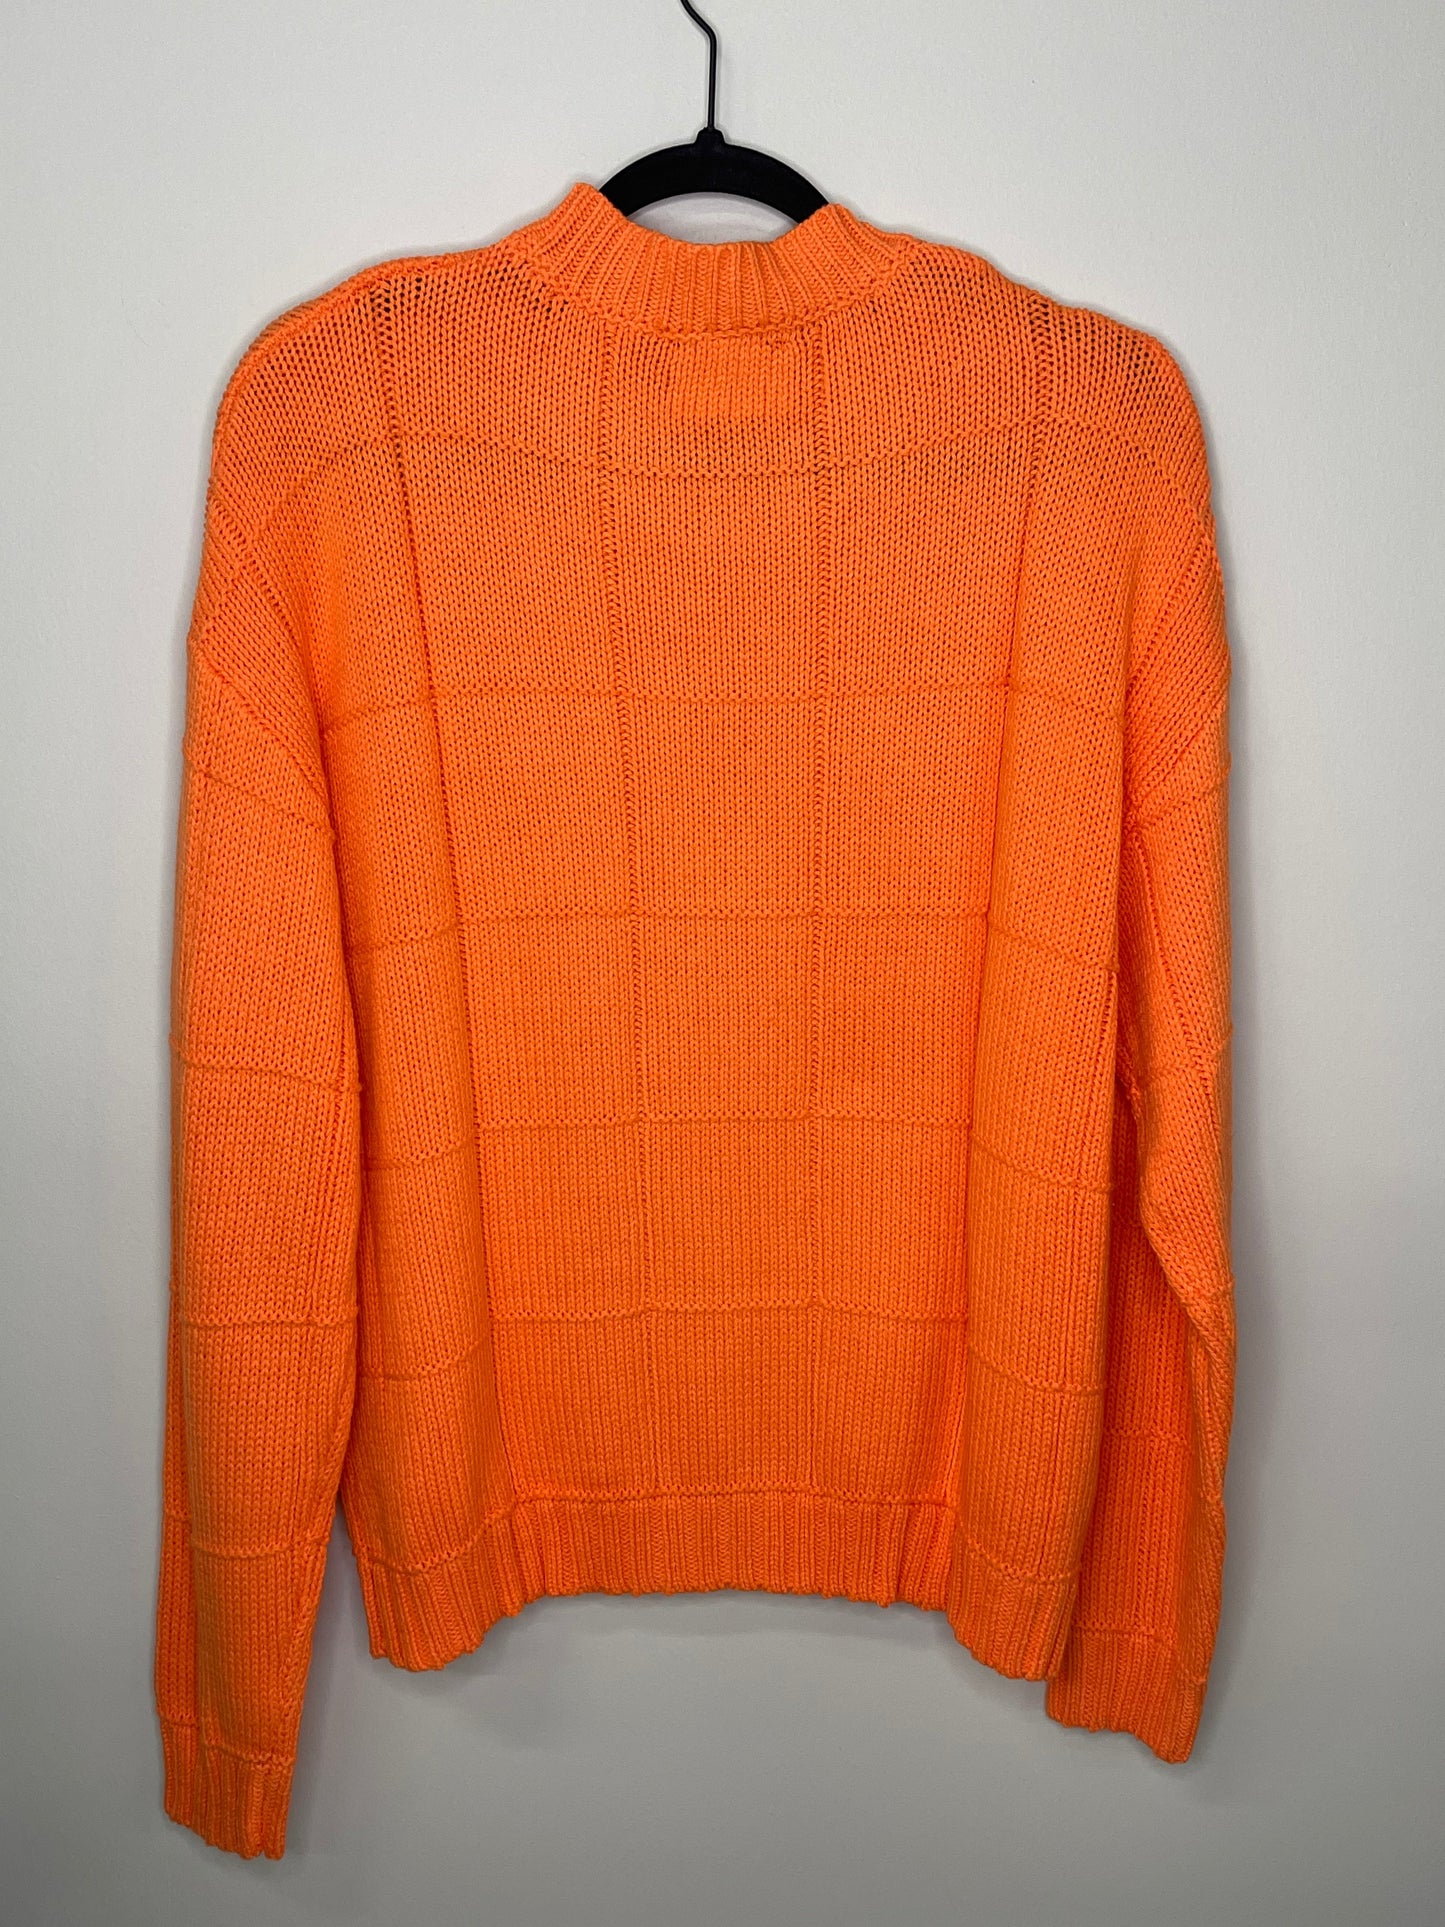 Sweater, Orange Diamond Stitch, Tiger Face